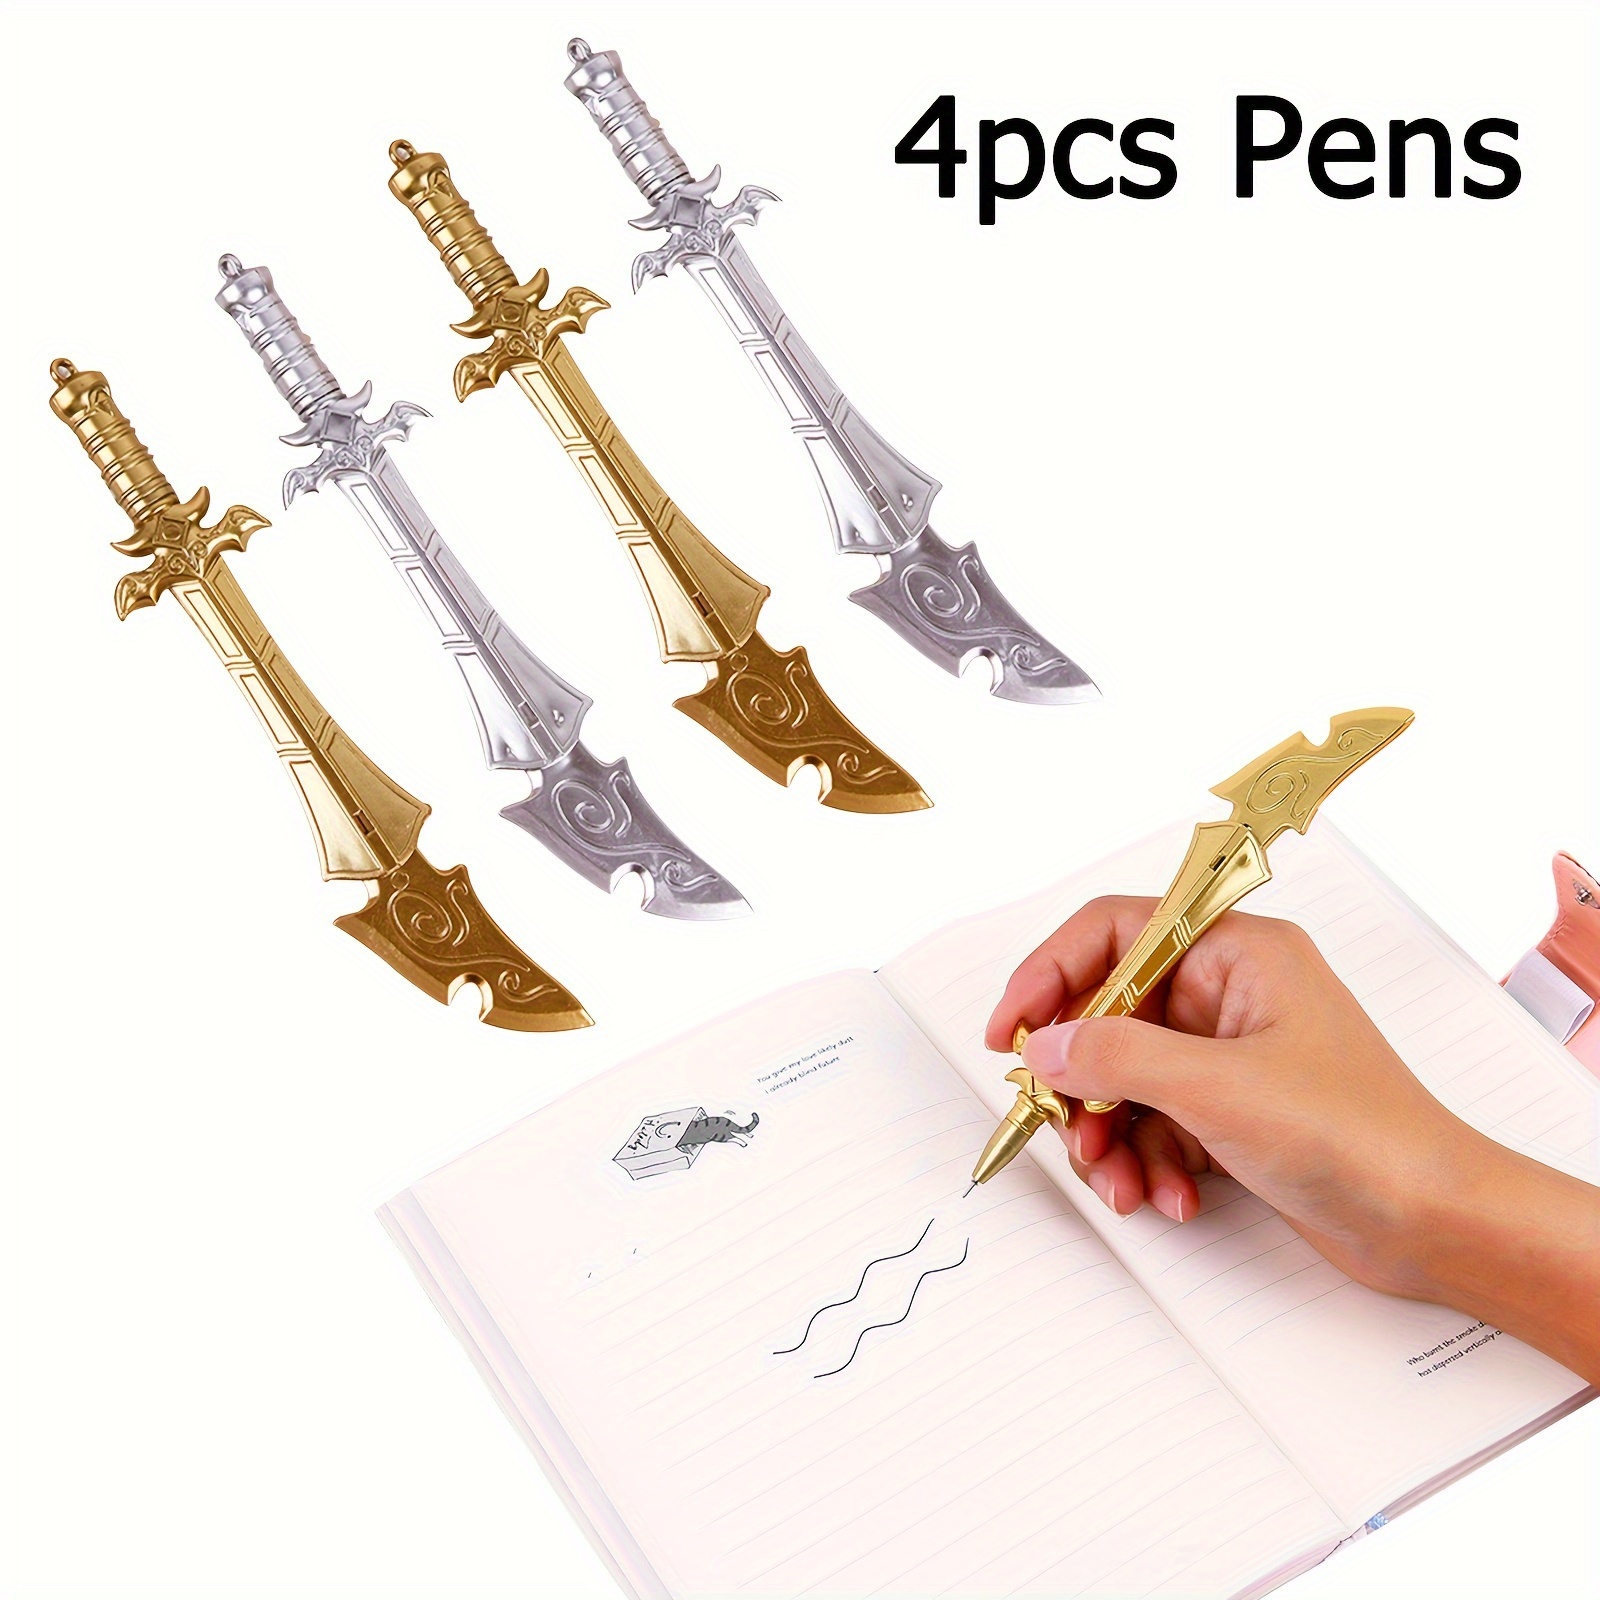 New Novelty Writing Pen Cartoon Sword Gel Pens Refillable Gift